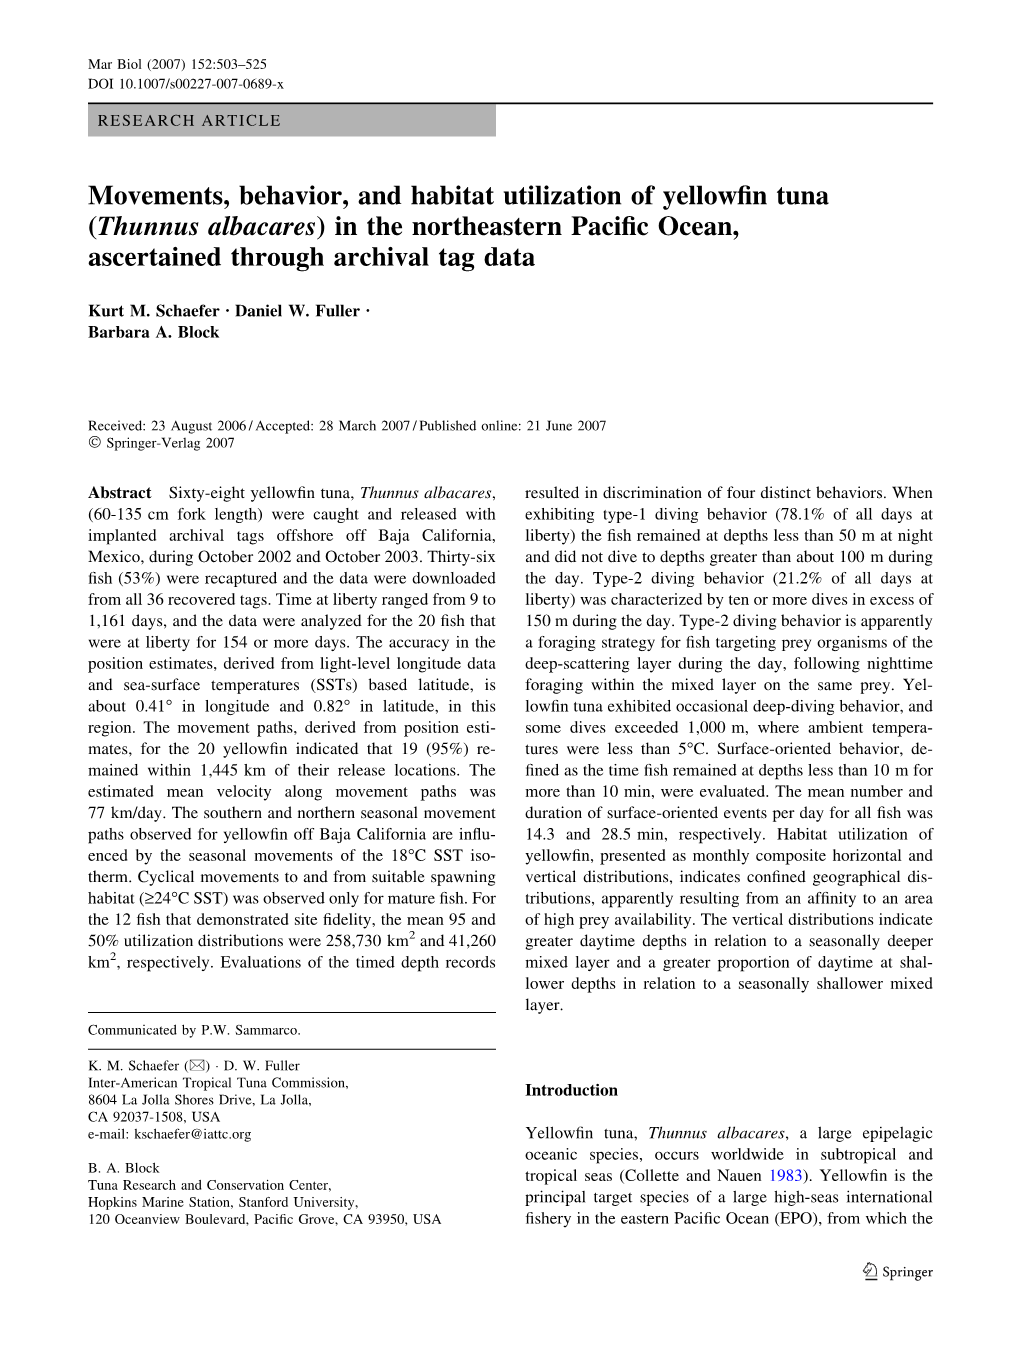 Movements, Behavior, and Habitat Utilization of Yellowfin Tuna